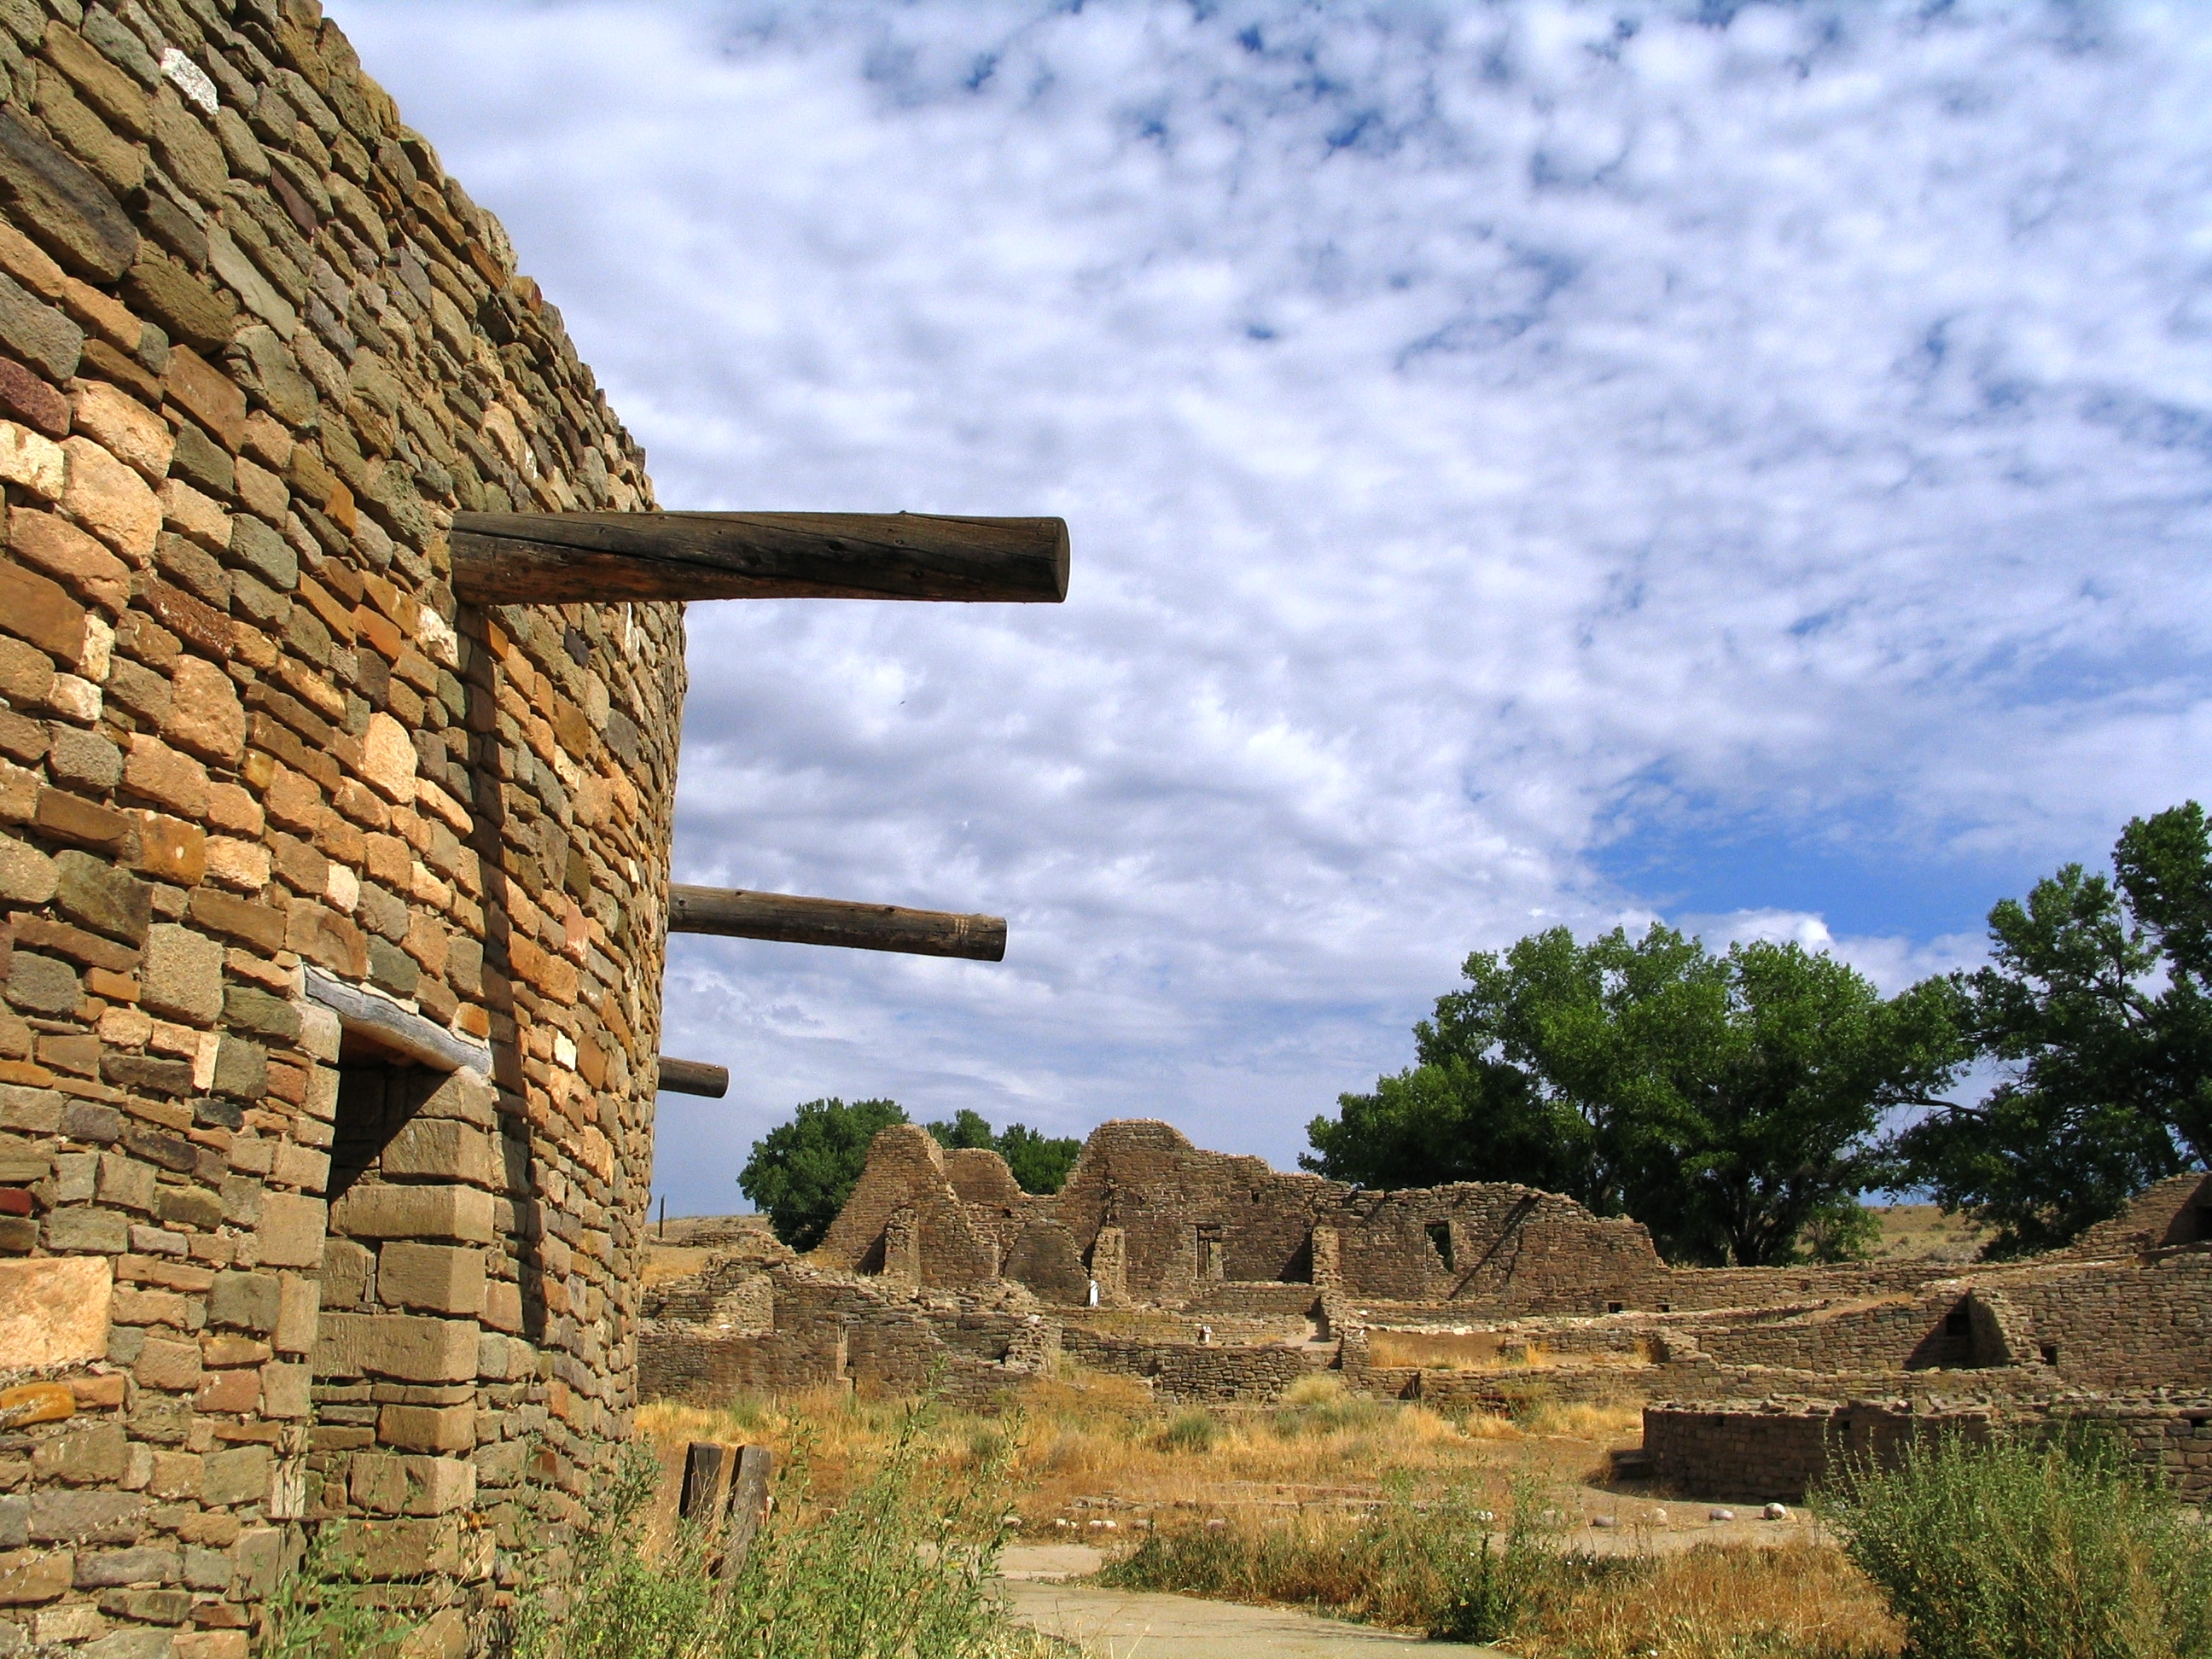 Reconstructed stone kiva amidst stone ruins